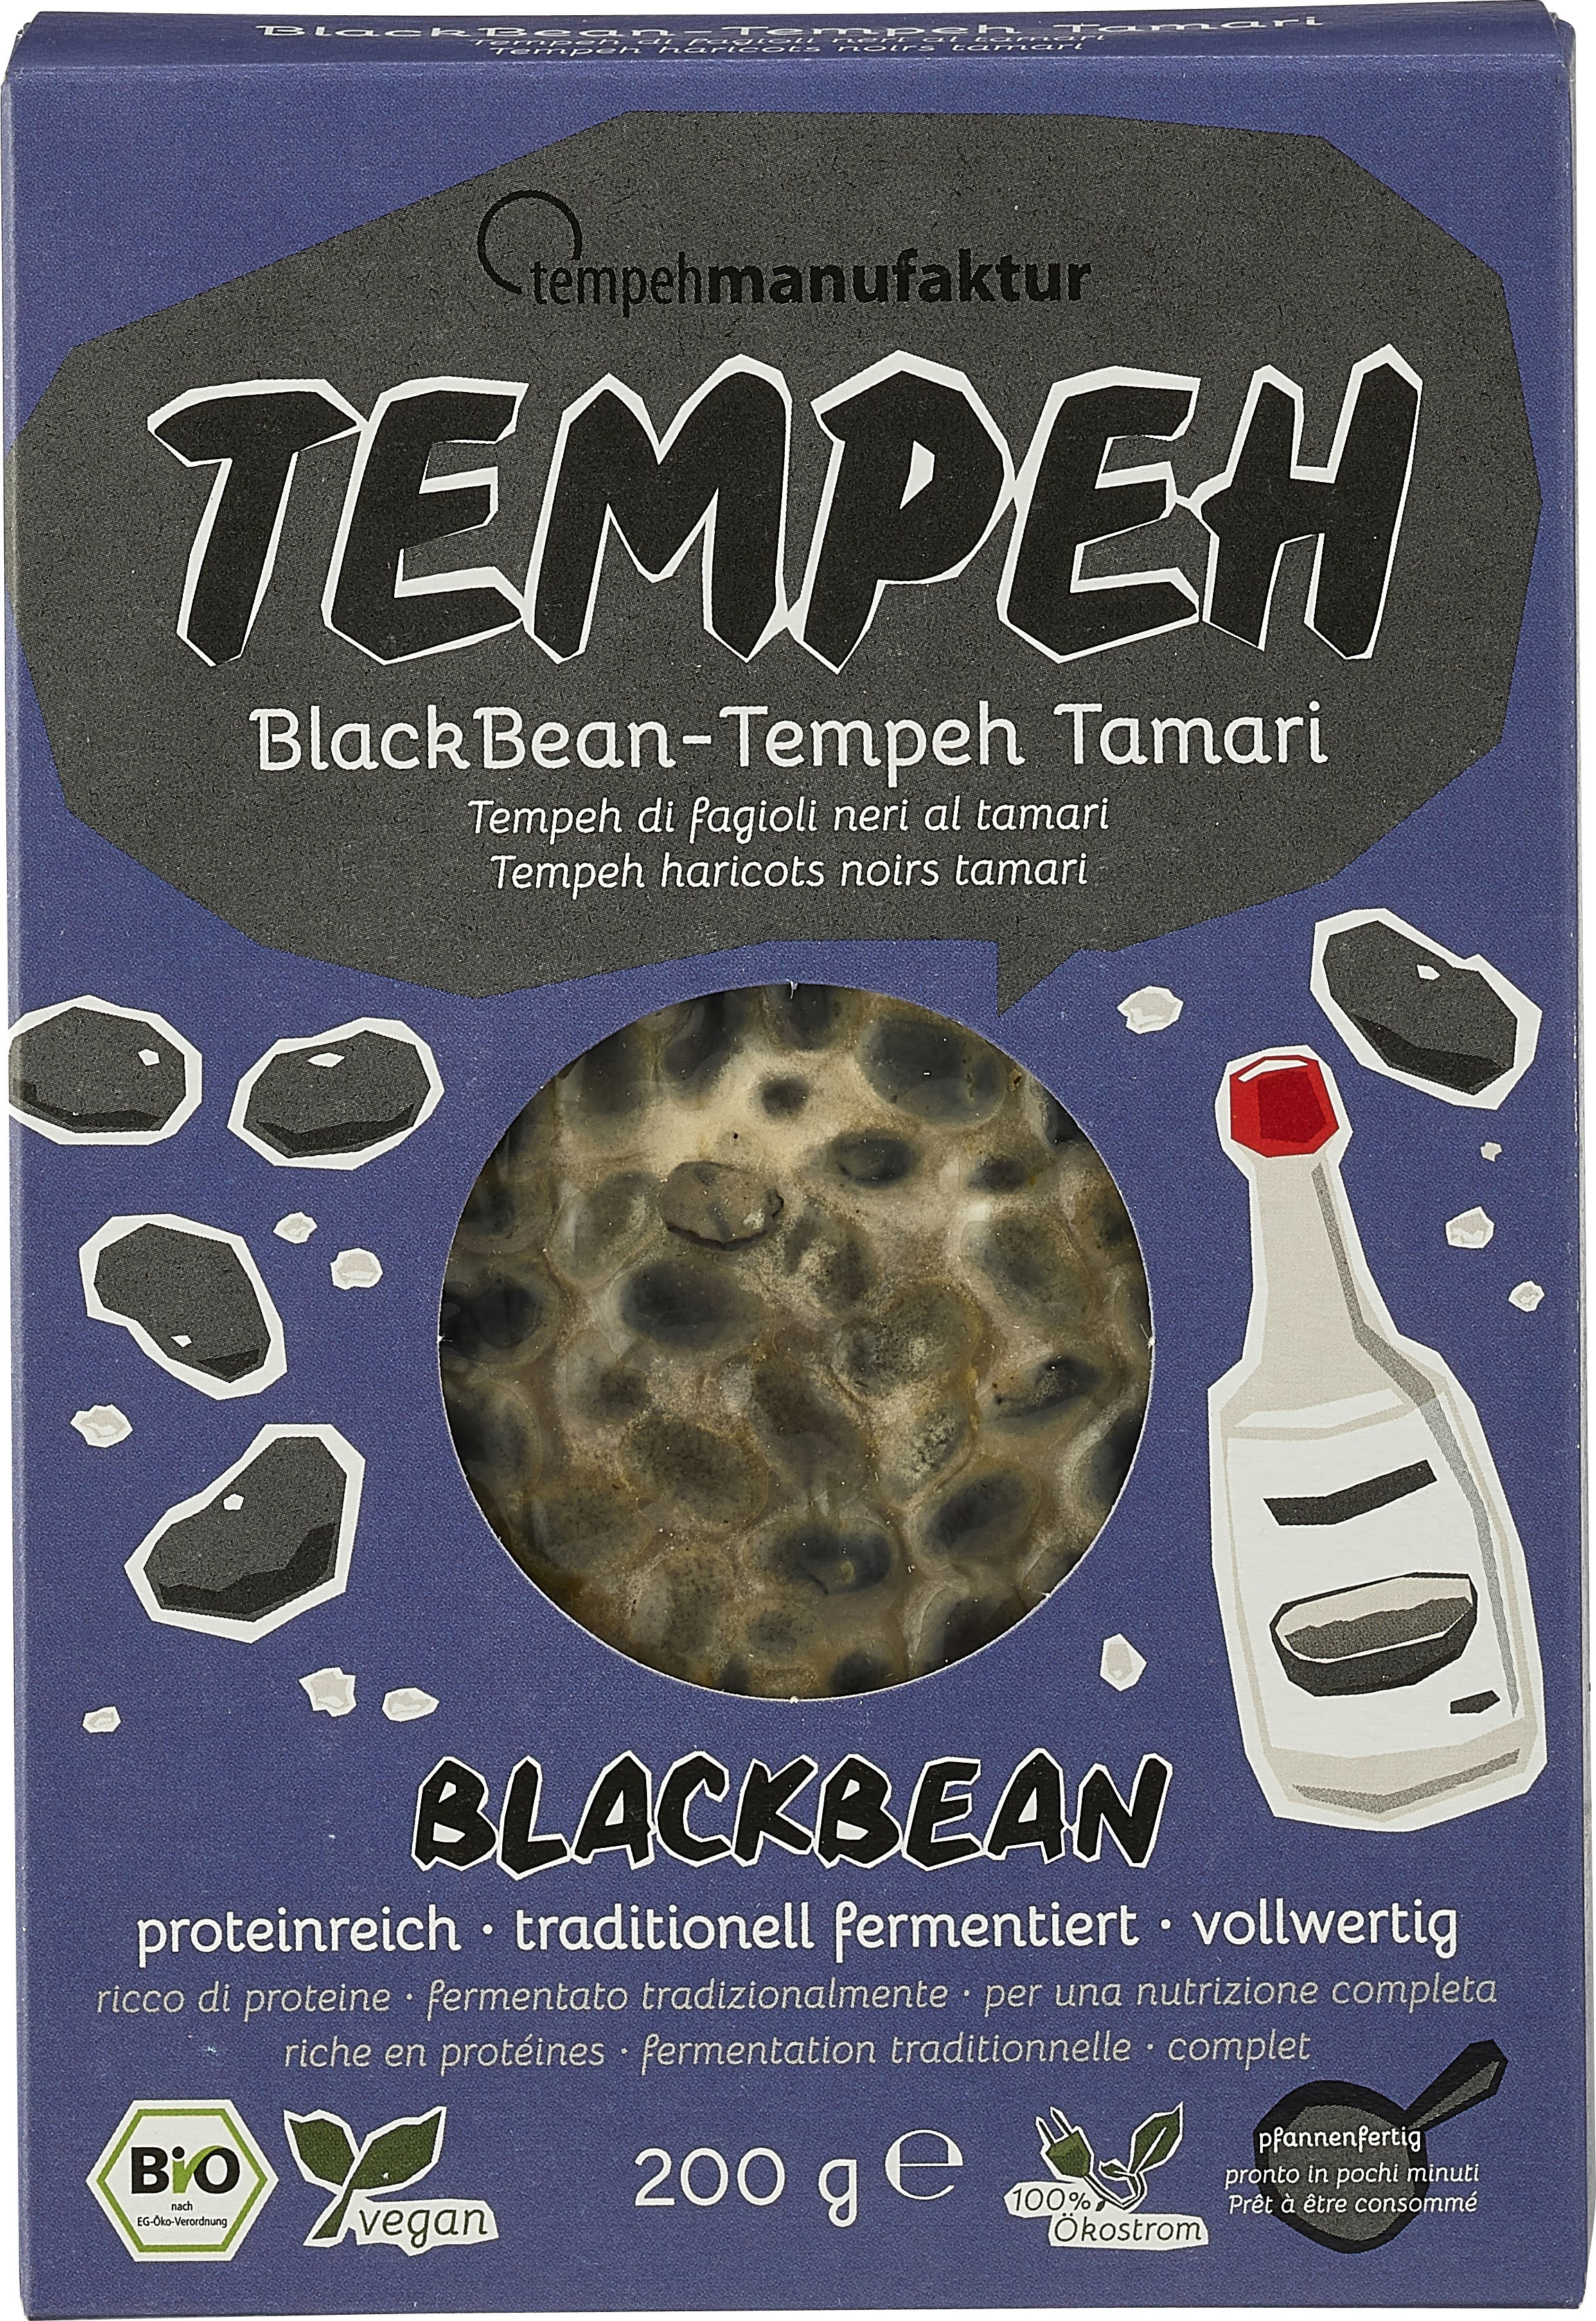 BlackBean Tempeh Tamari